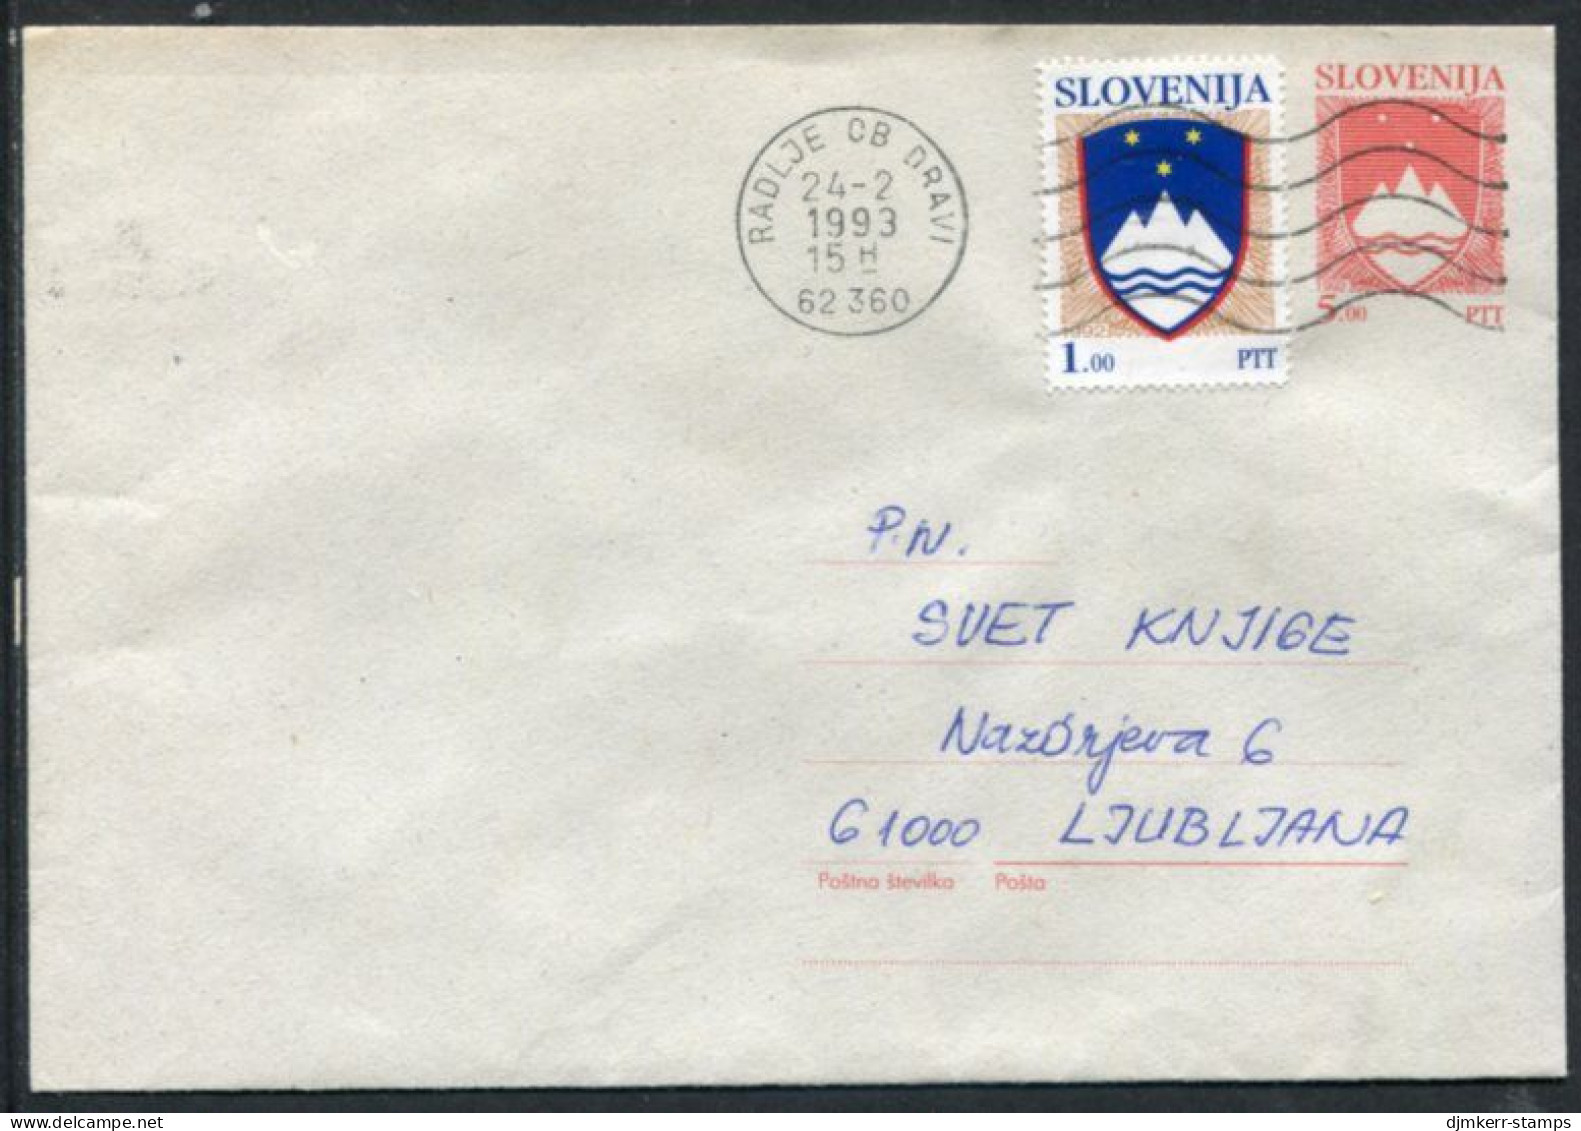 SLOVENIA 1992 5.00 T.  Postal Stationery Envelope On Grey Paper Used With Added 1 T. Stamp.  Michel U1b - Slovénie